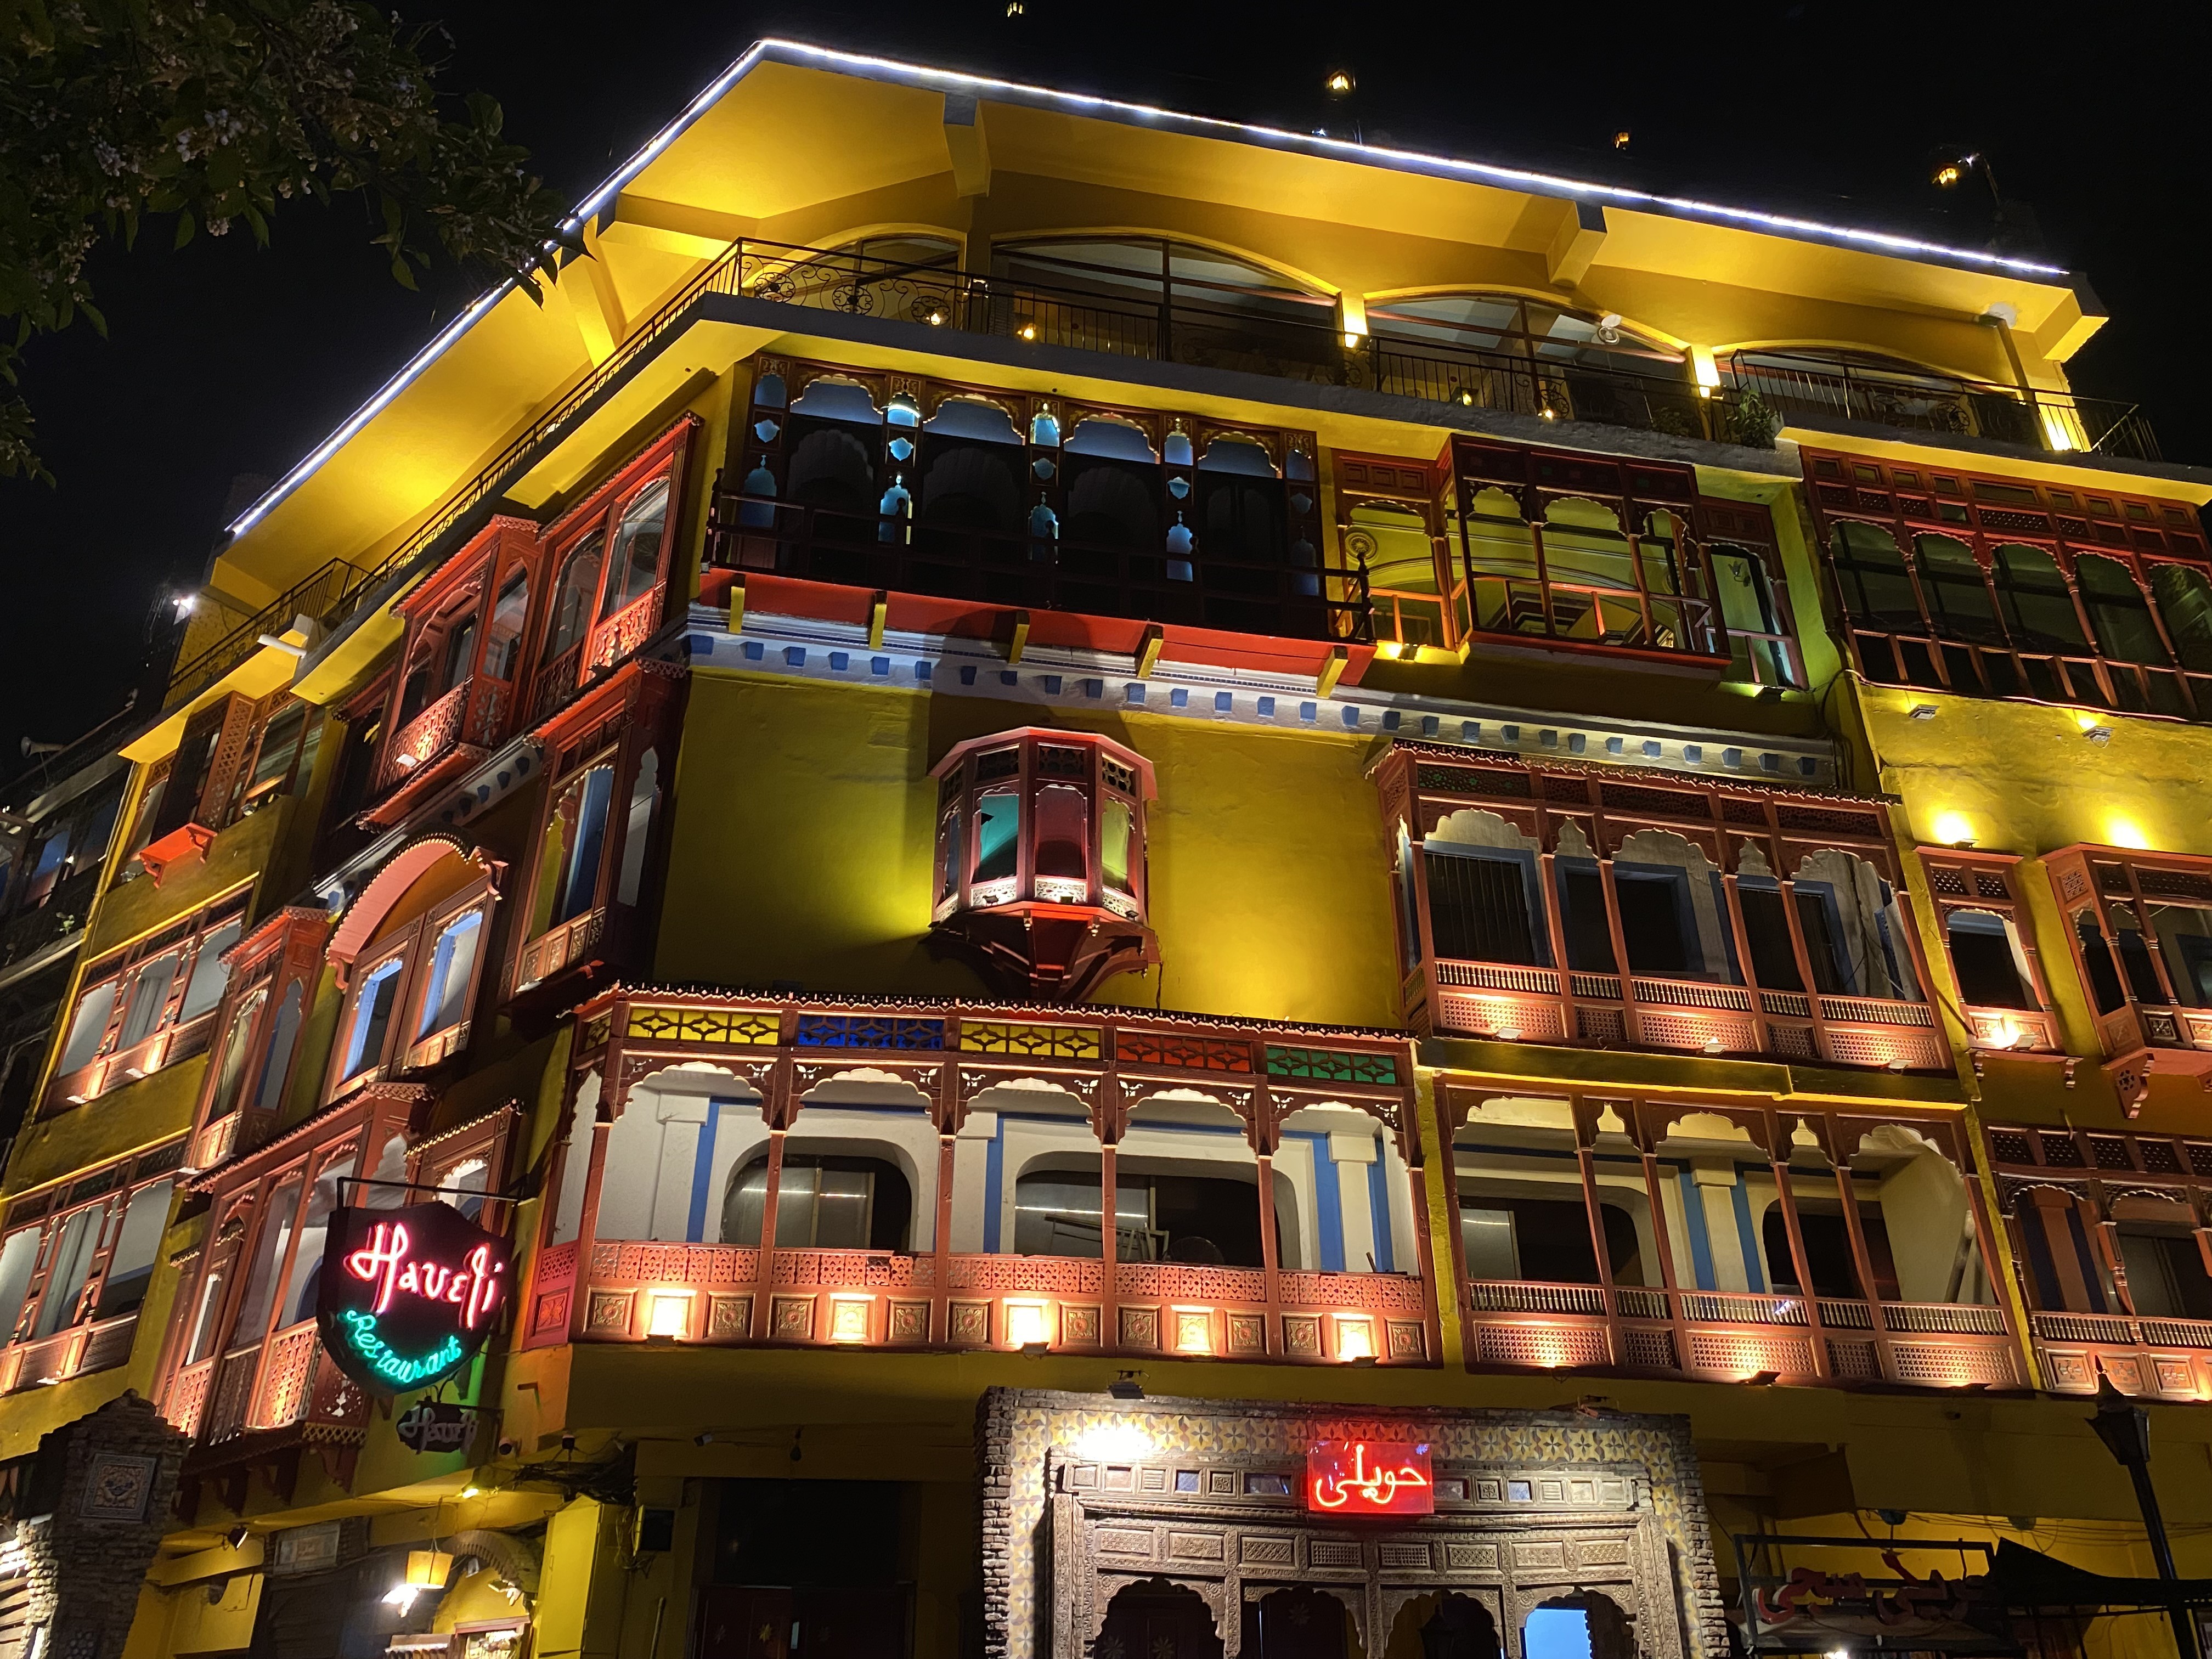 Haveli Restaurant, located in the historic Haveli Khalil Khan